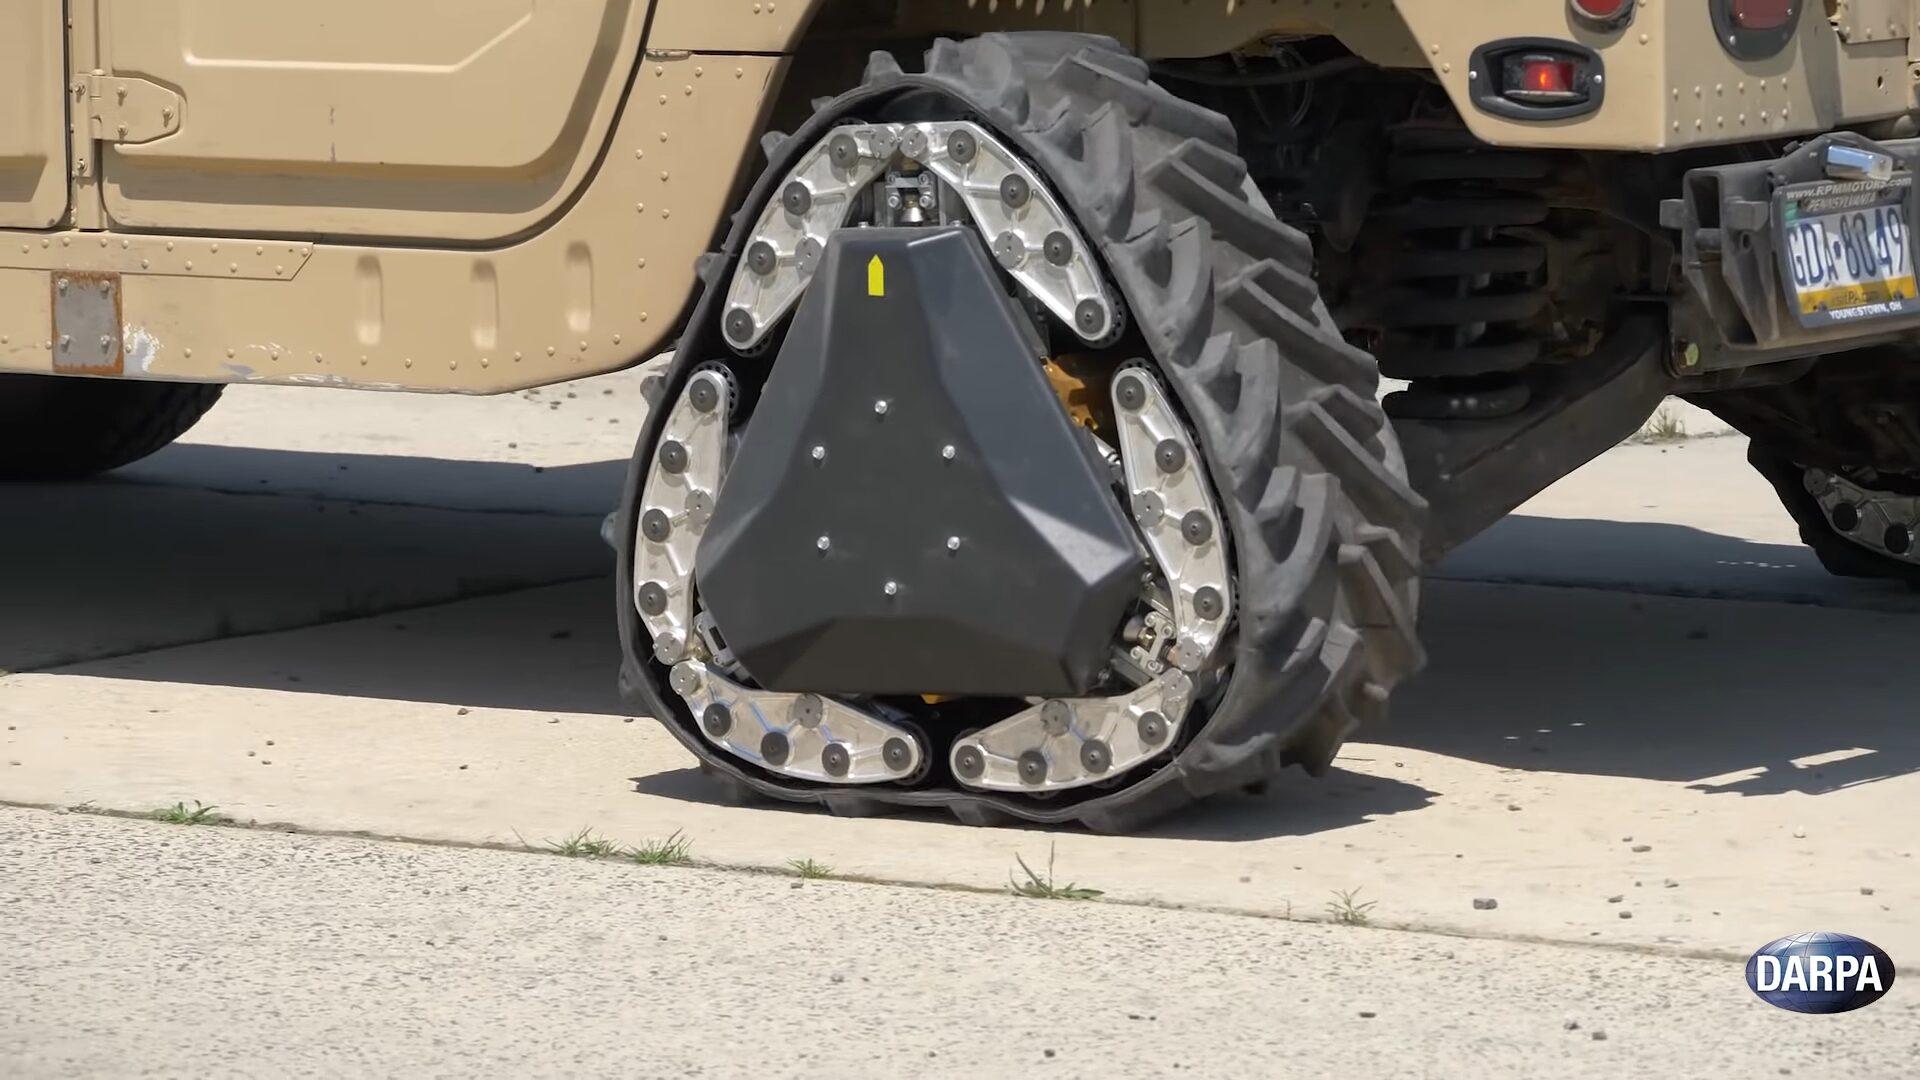 DARPA Wheels Transform Into Treads On The Go